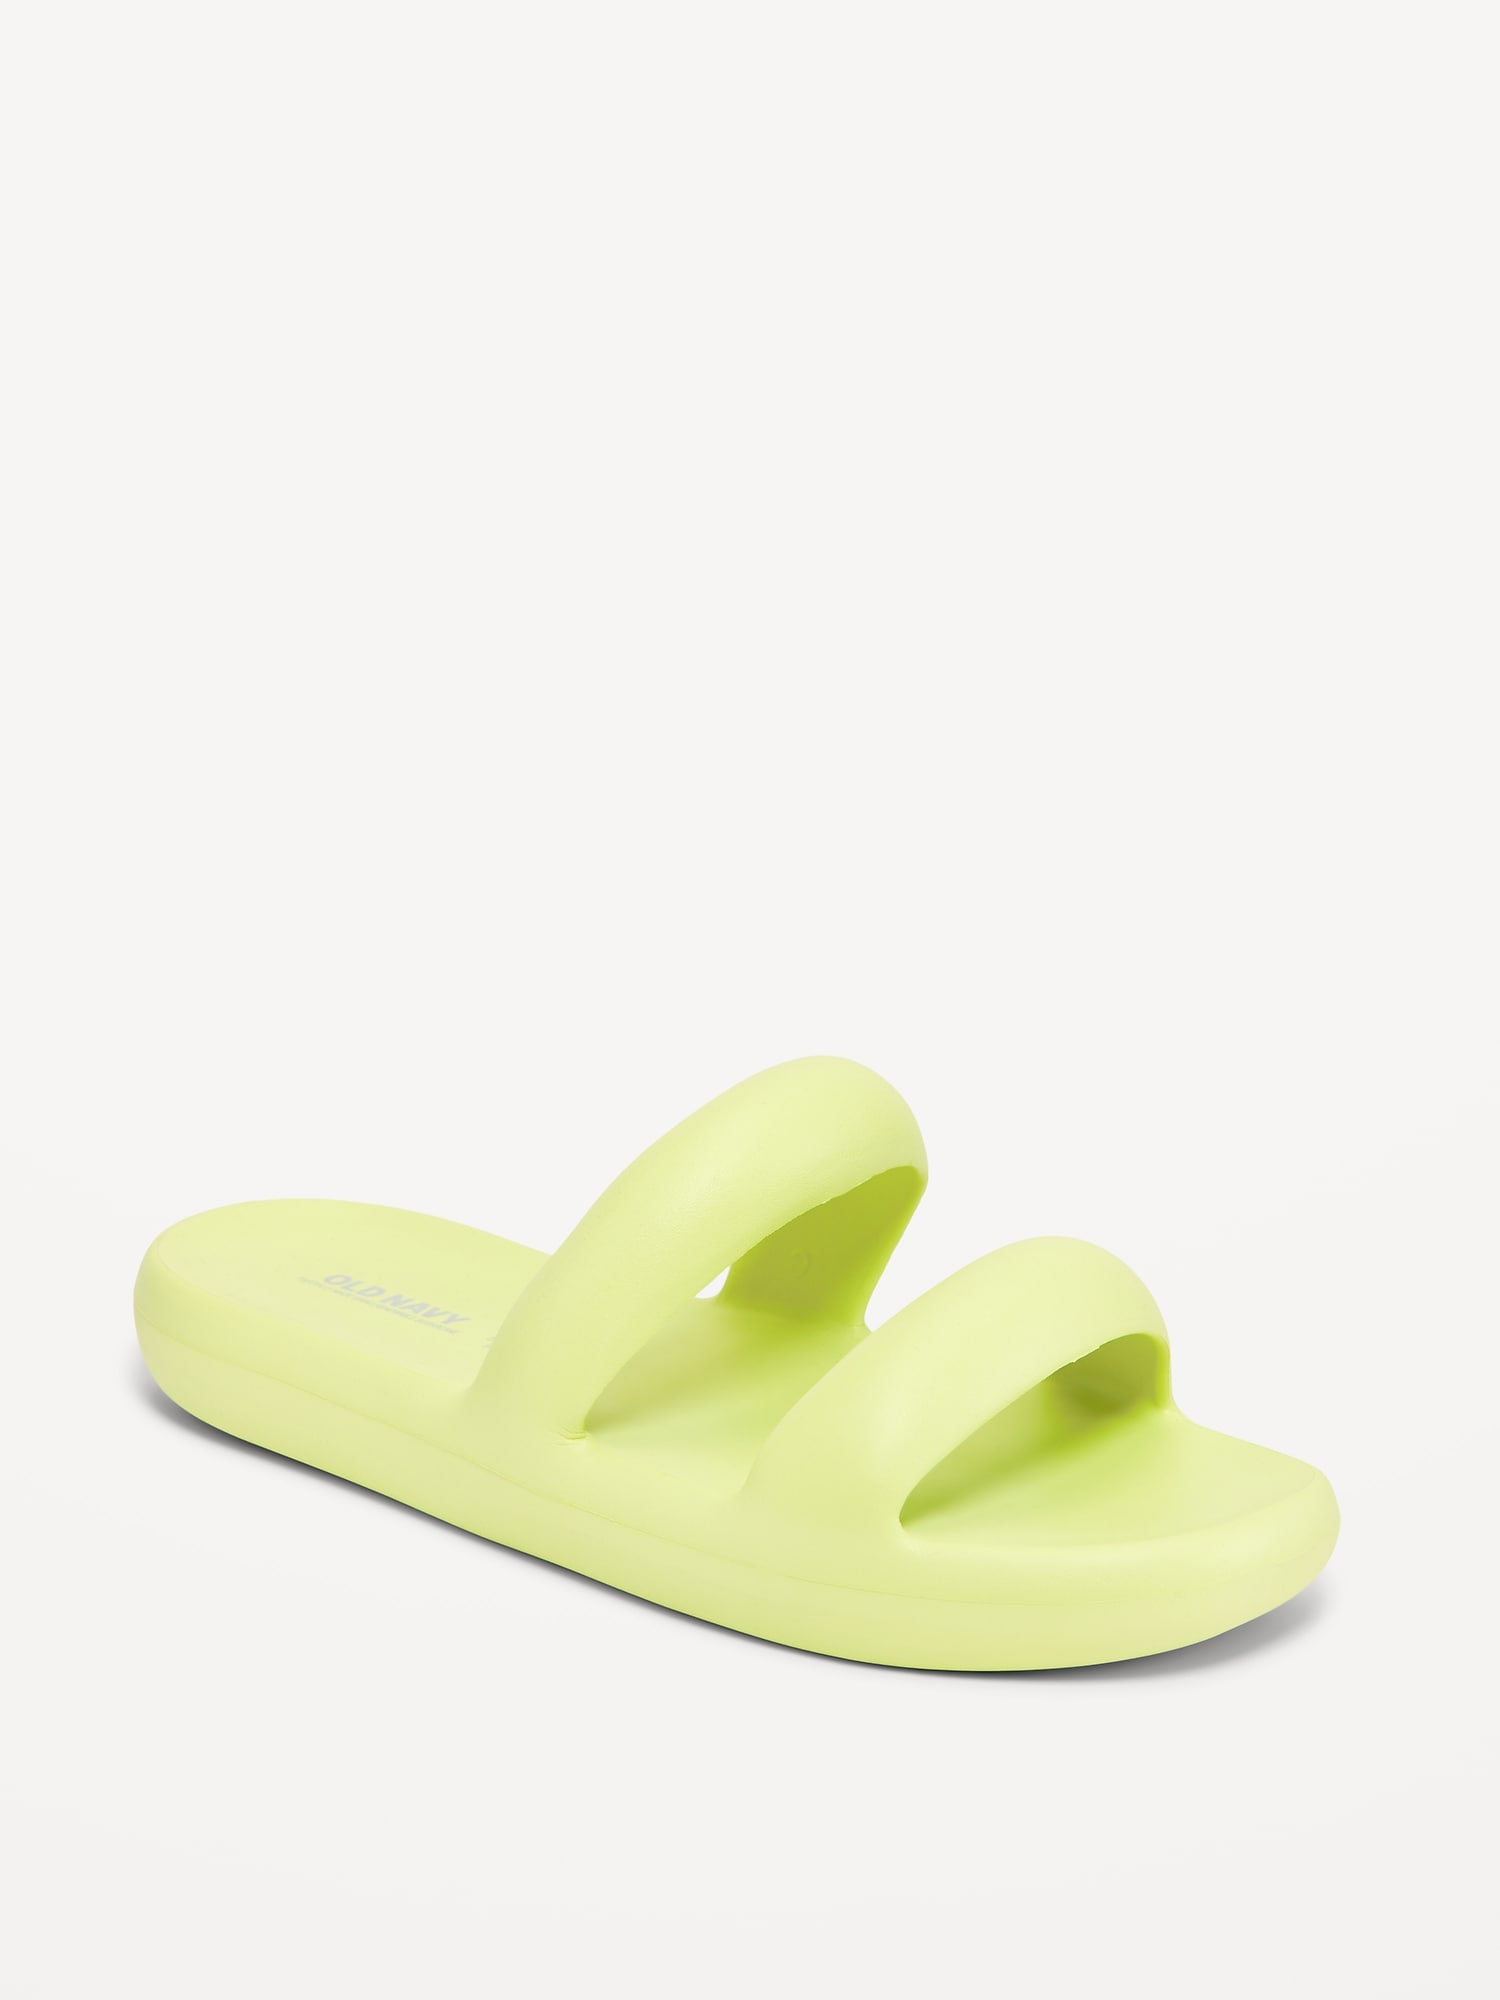 Old Navy Toddler Boys Girls 6 7 8 Flip Flops Sandals OLIVE GREEN Unisex  #17121 | eBay